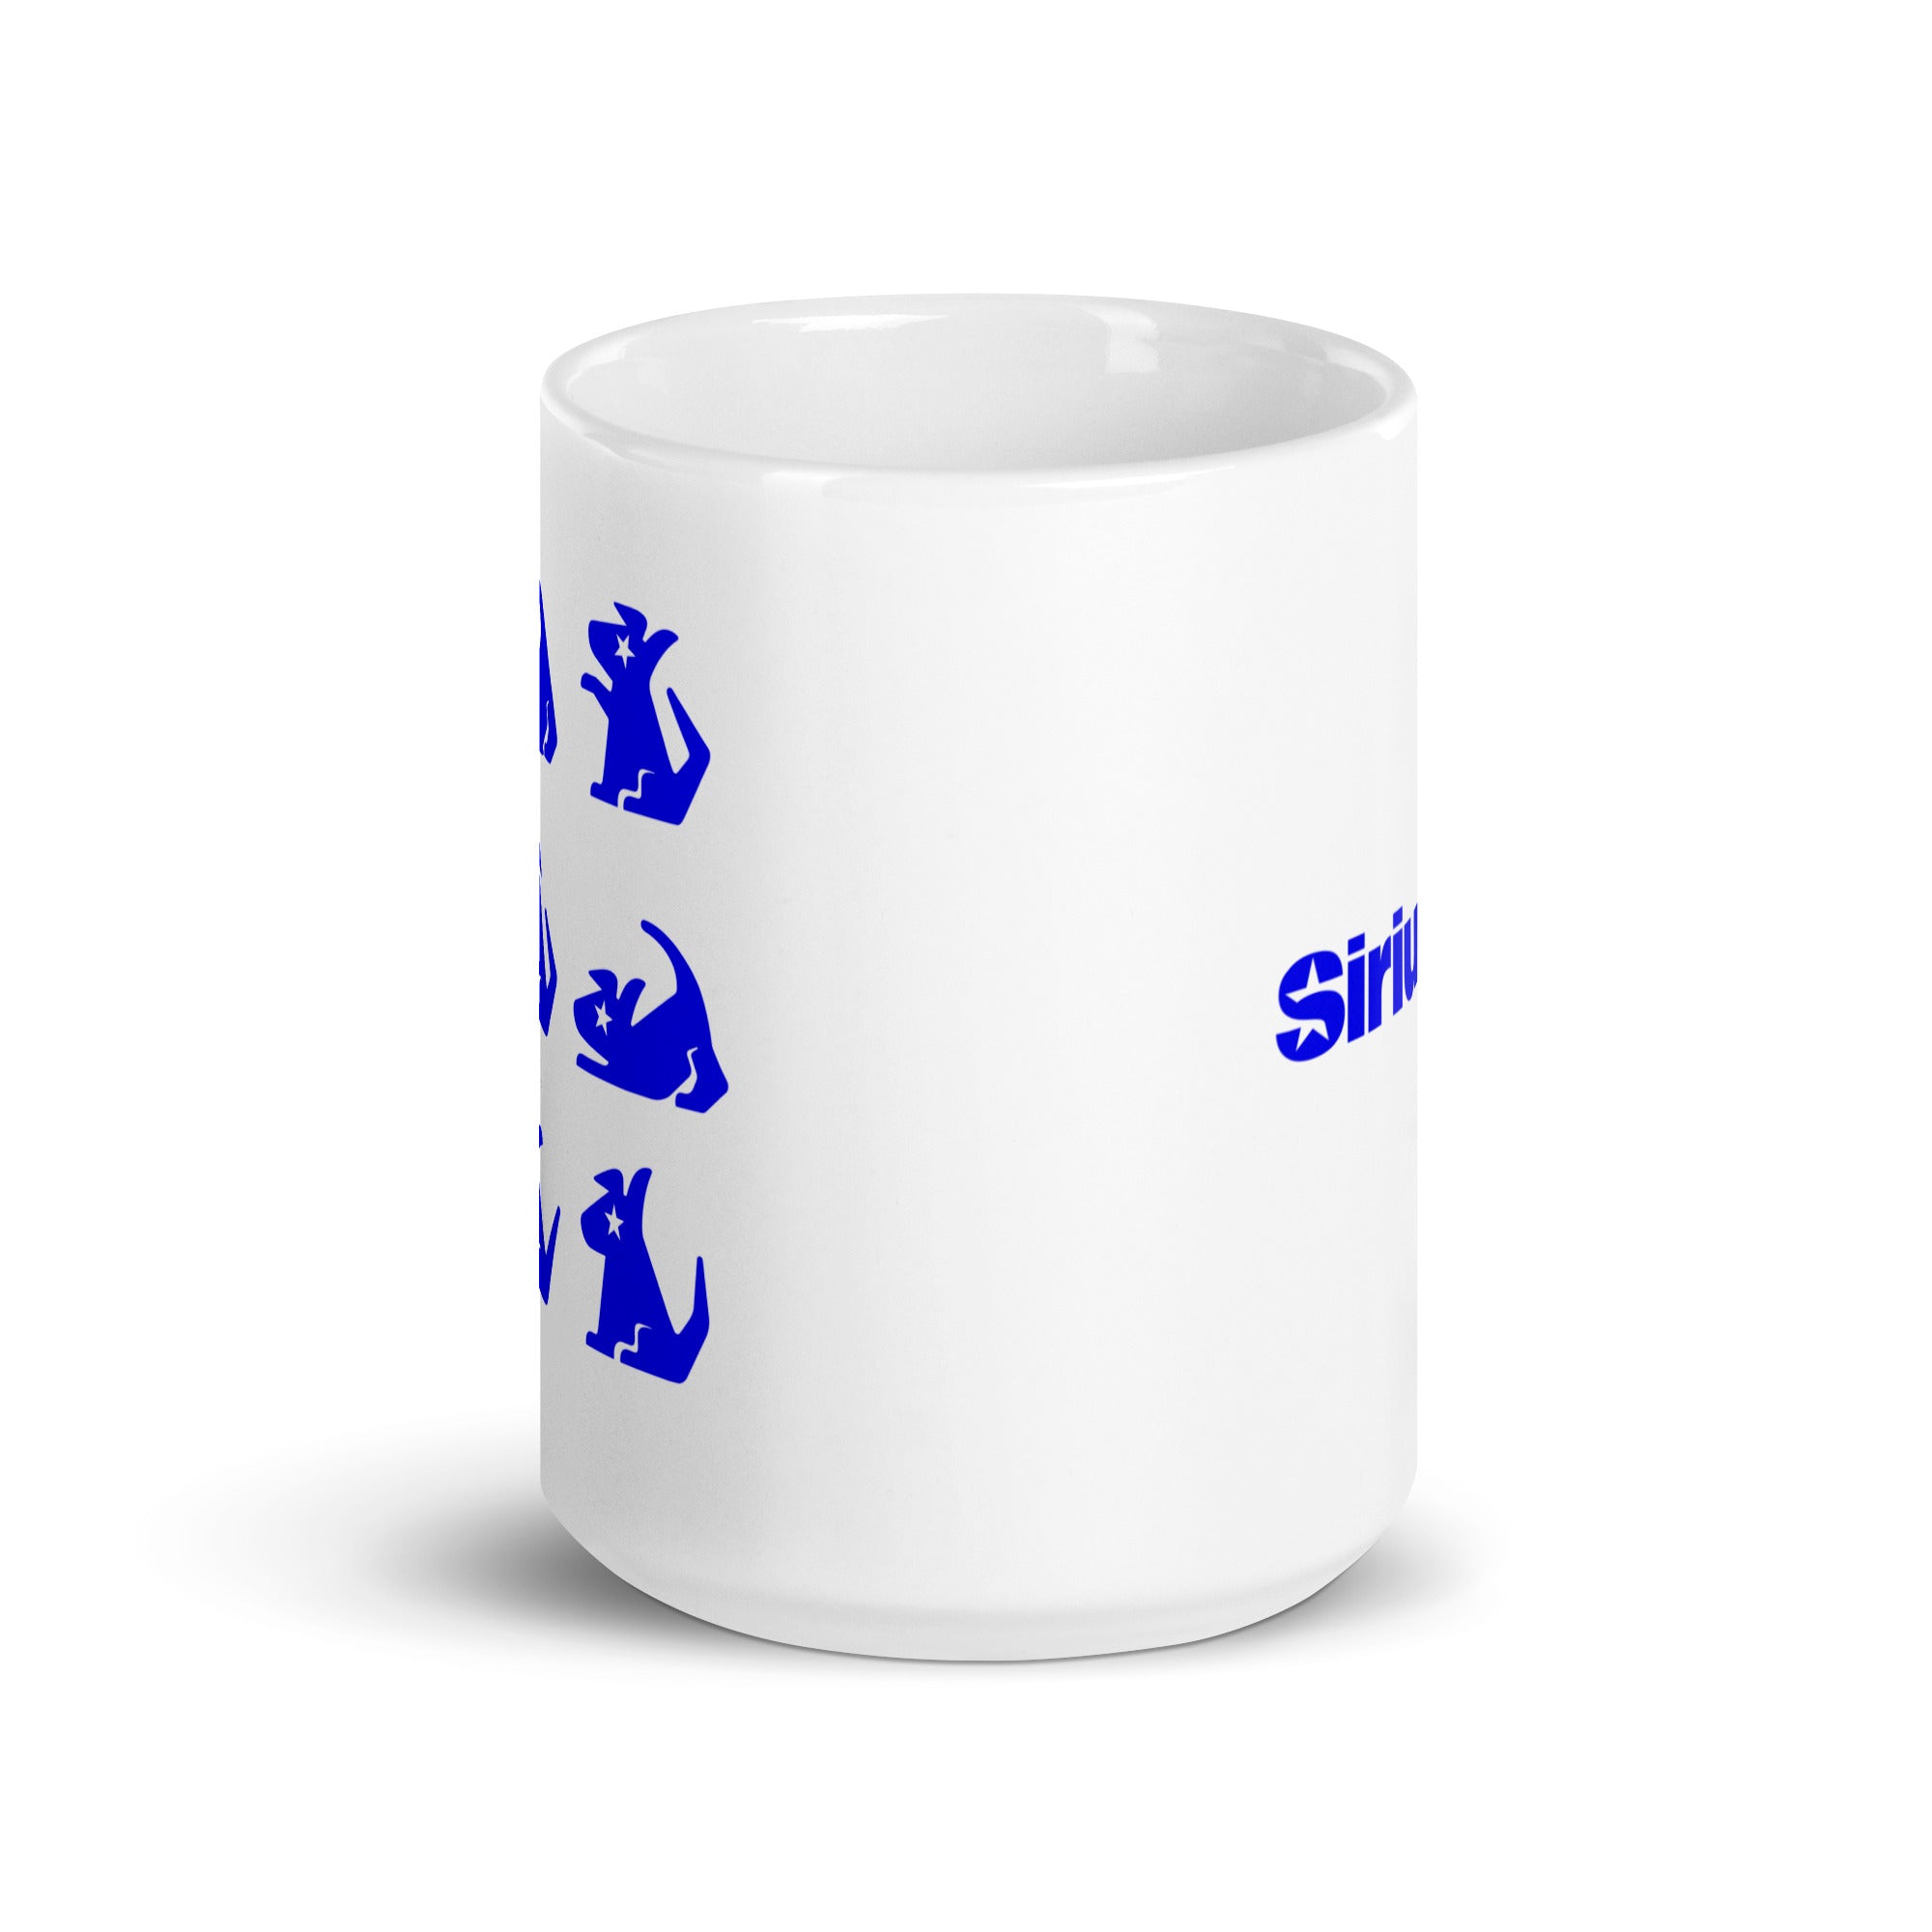 SiriusXM: Next Gen Blue Multi Stella Mug